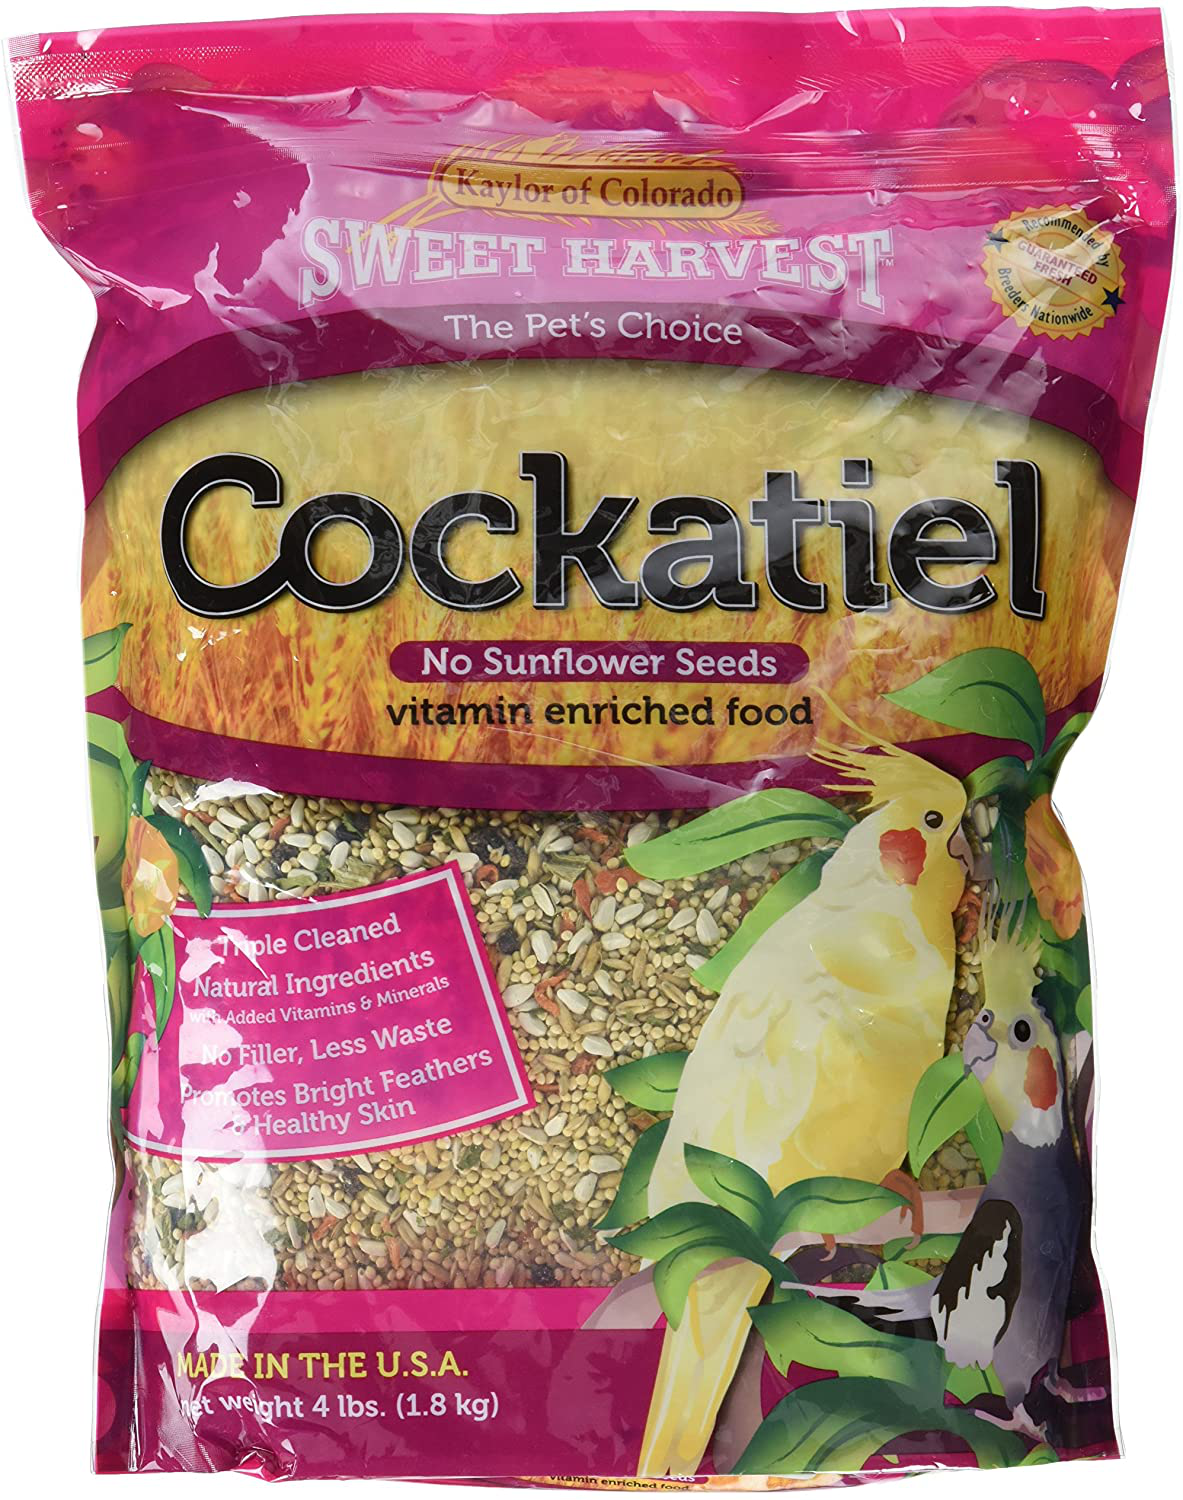 Sweet Harvest Cockatiel Bird Food (No Sunflower Seeds), 4 Lbs Bag - Seed Mix for Cockatiels